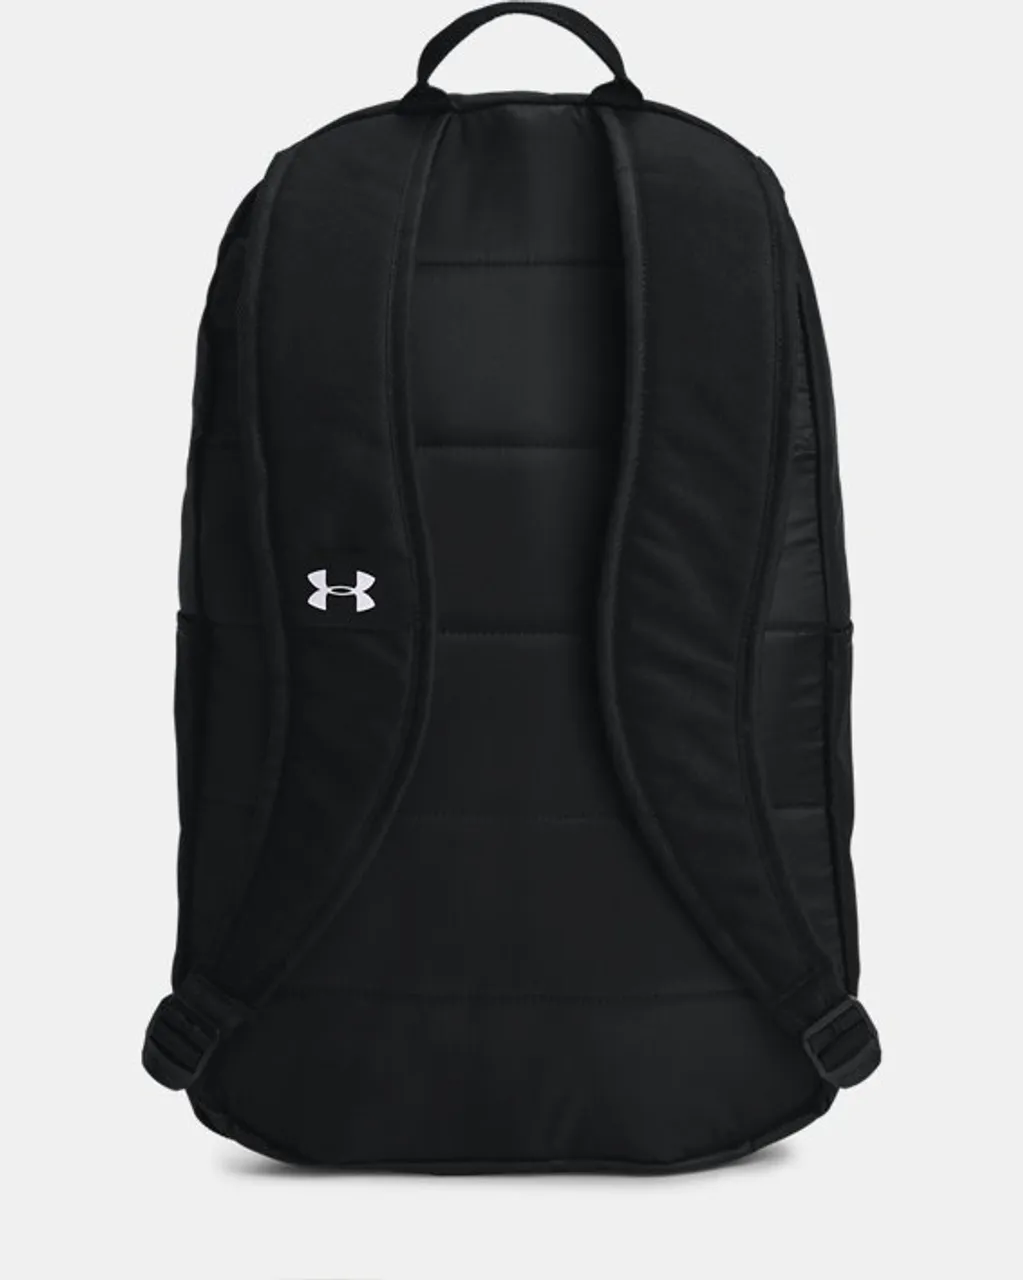 Unisex  Under Armour  Halftime Backpack Black / Black / White